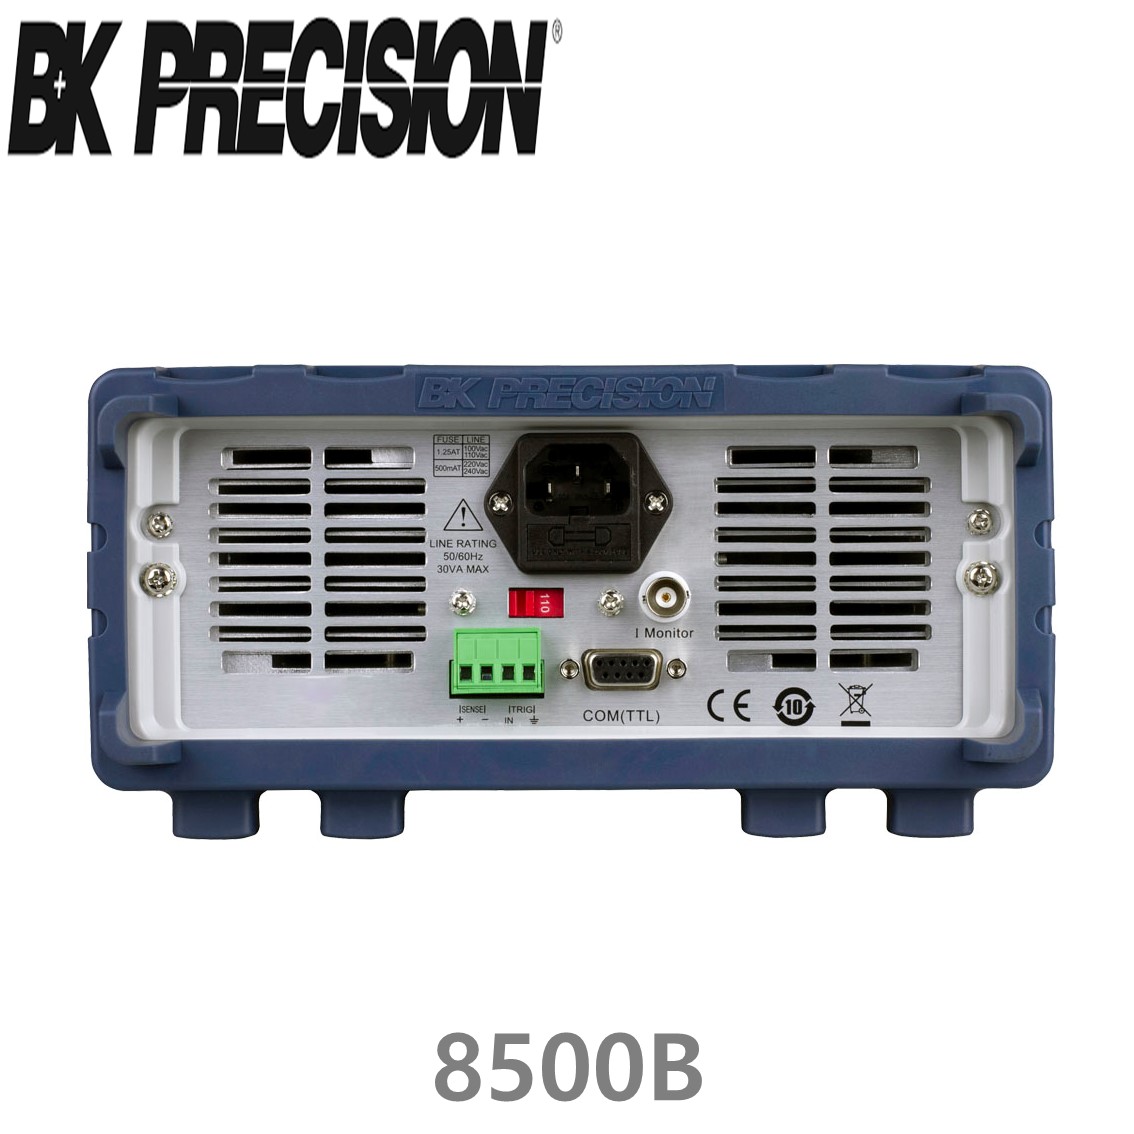 [ BK PRECISION ] BK 8500B 150V/30A, 300W, DC전자부하기 B&K 8500B